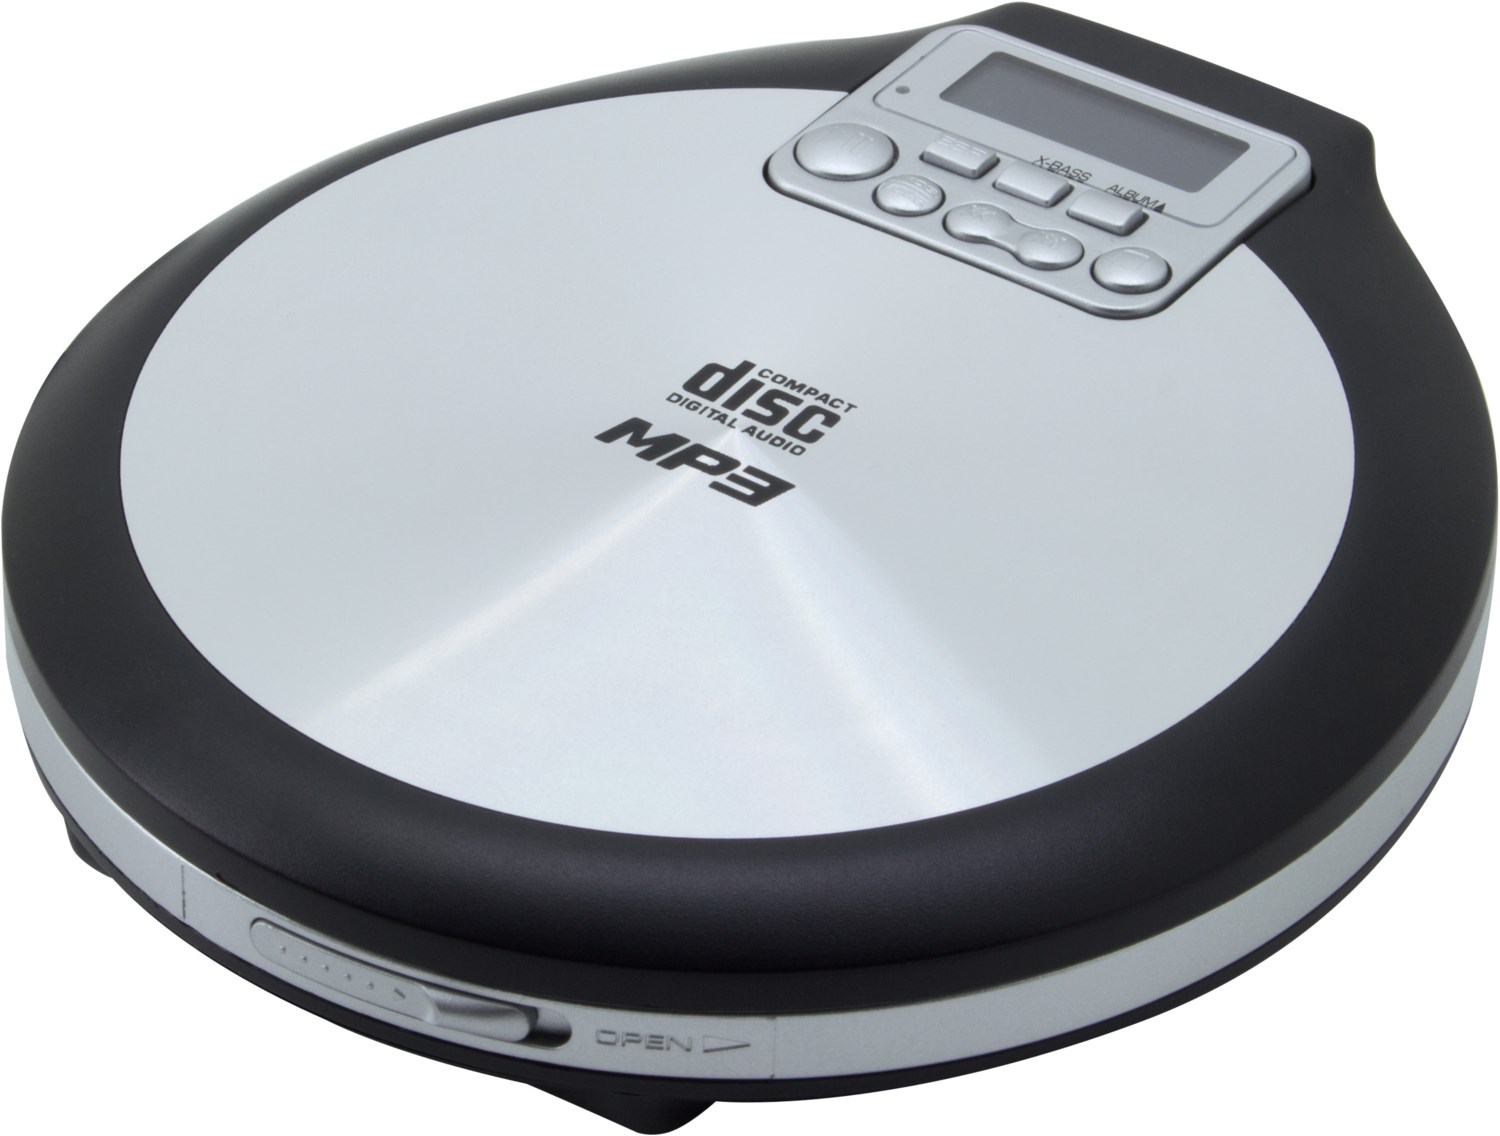 CD 9220 tragbarer MP3 CD-Player von Soundmaster